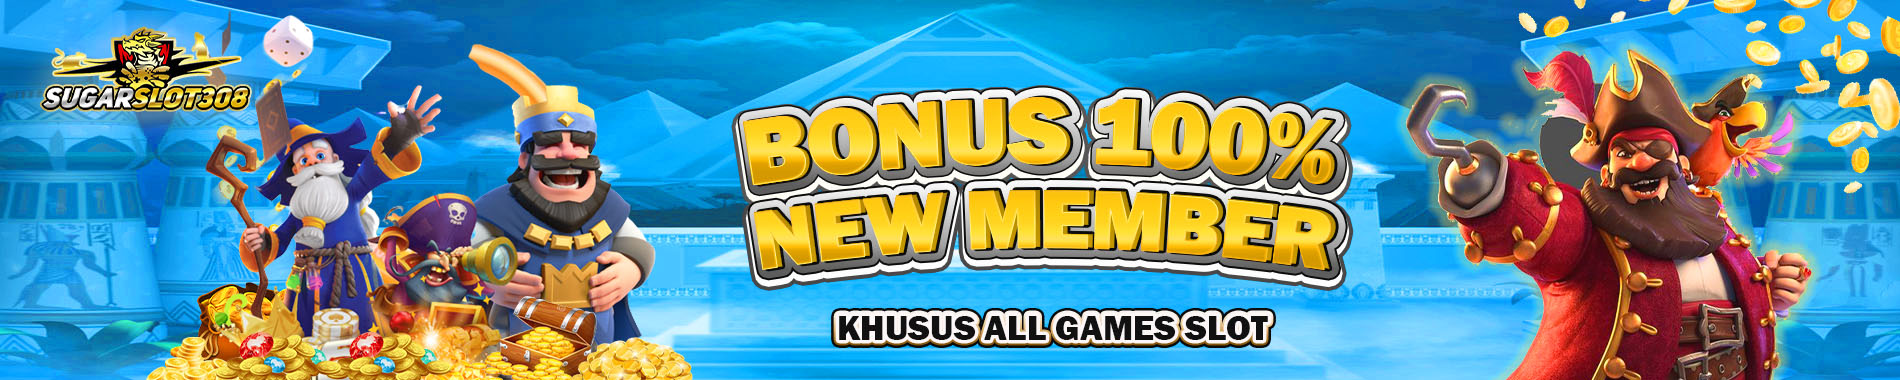 bonus new member 100